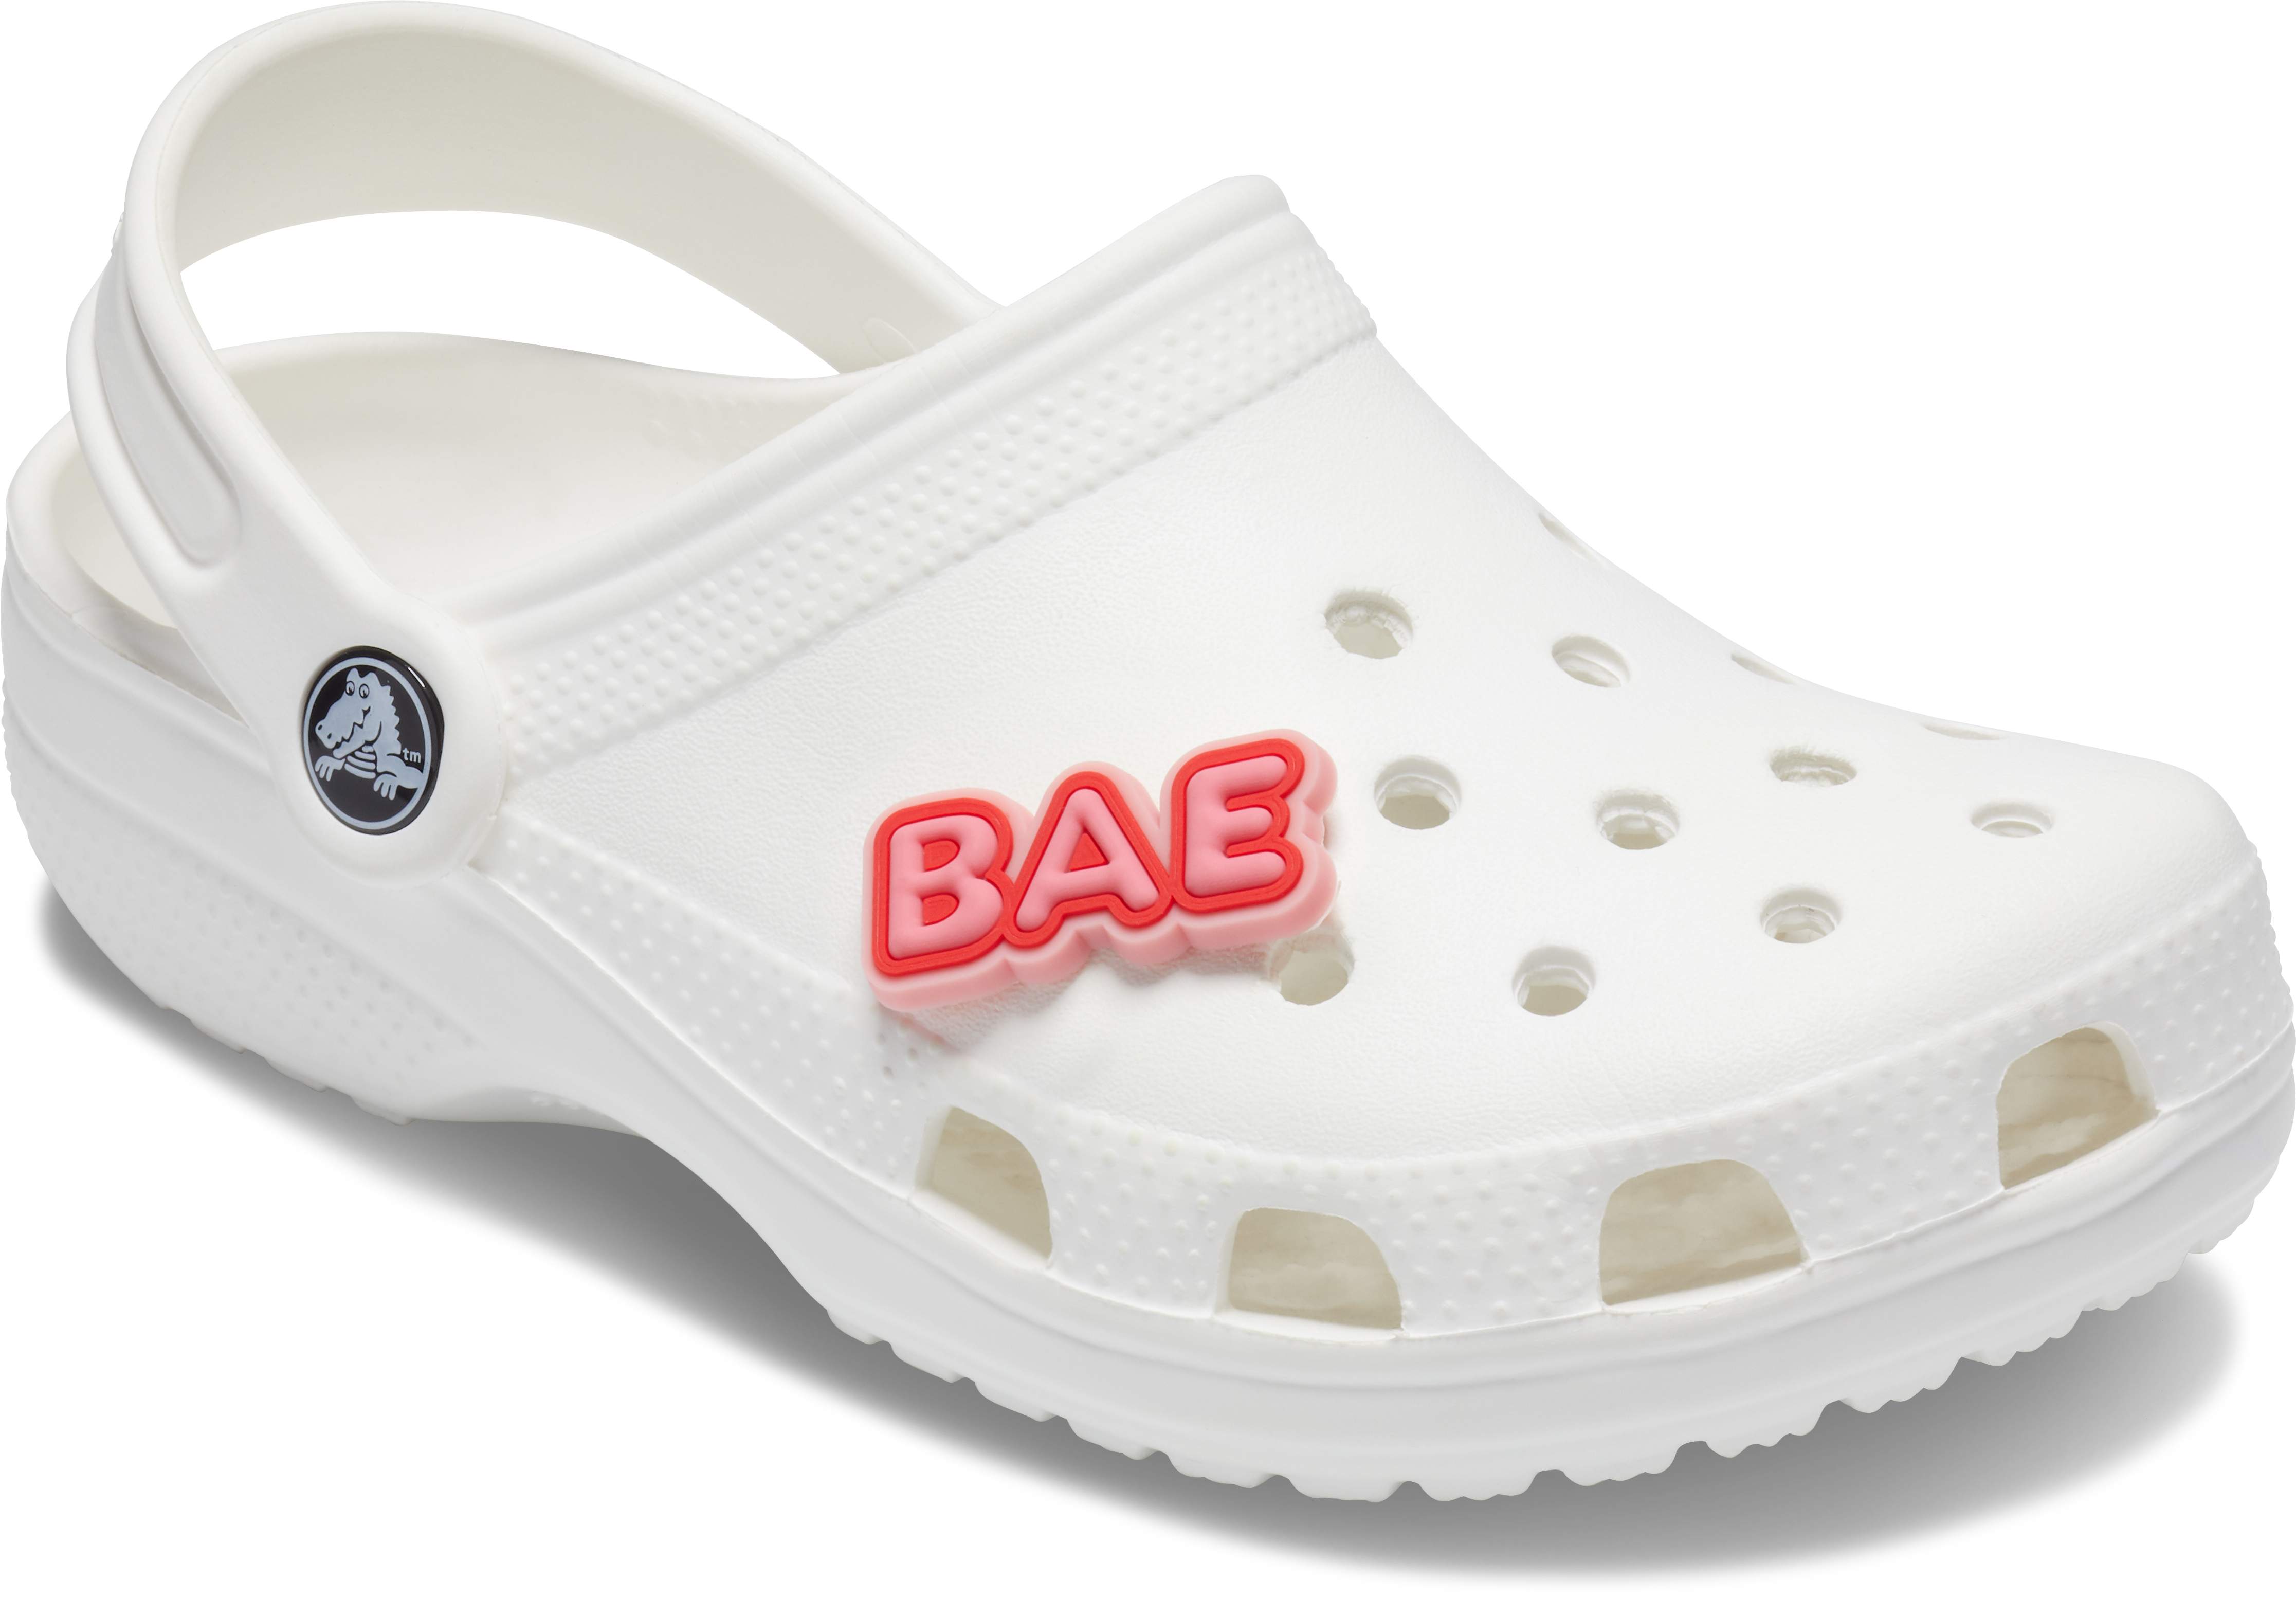 Bae Jibbitz Shoe Charm - Crocs